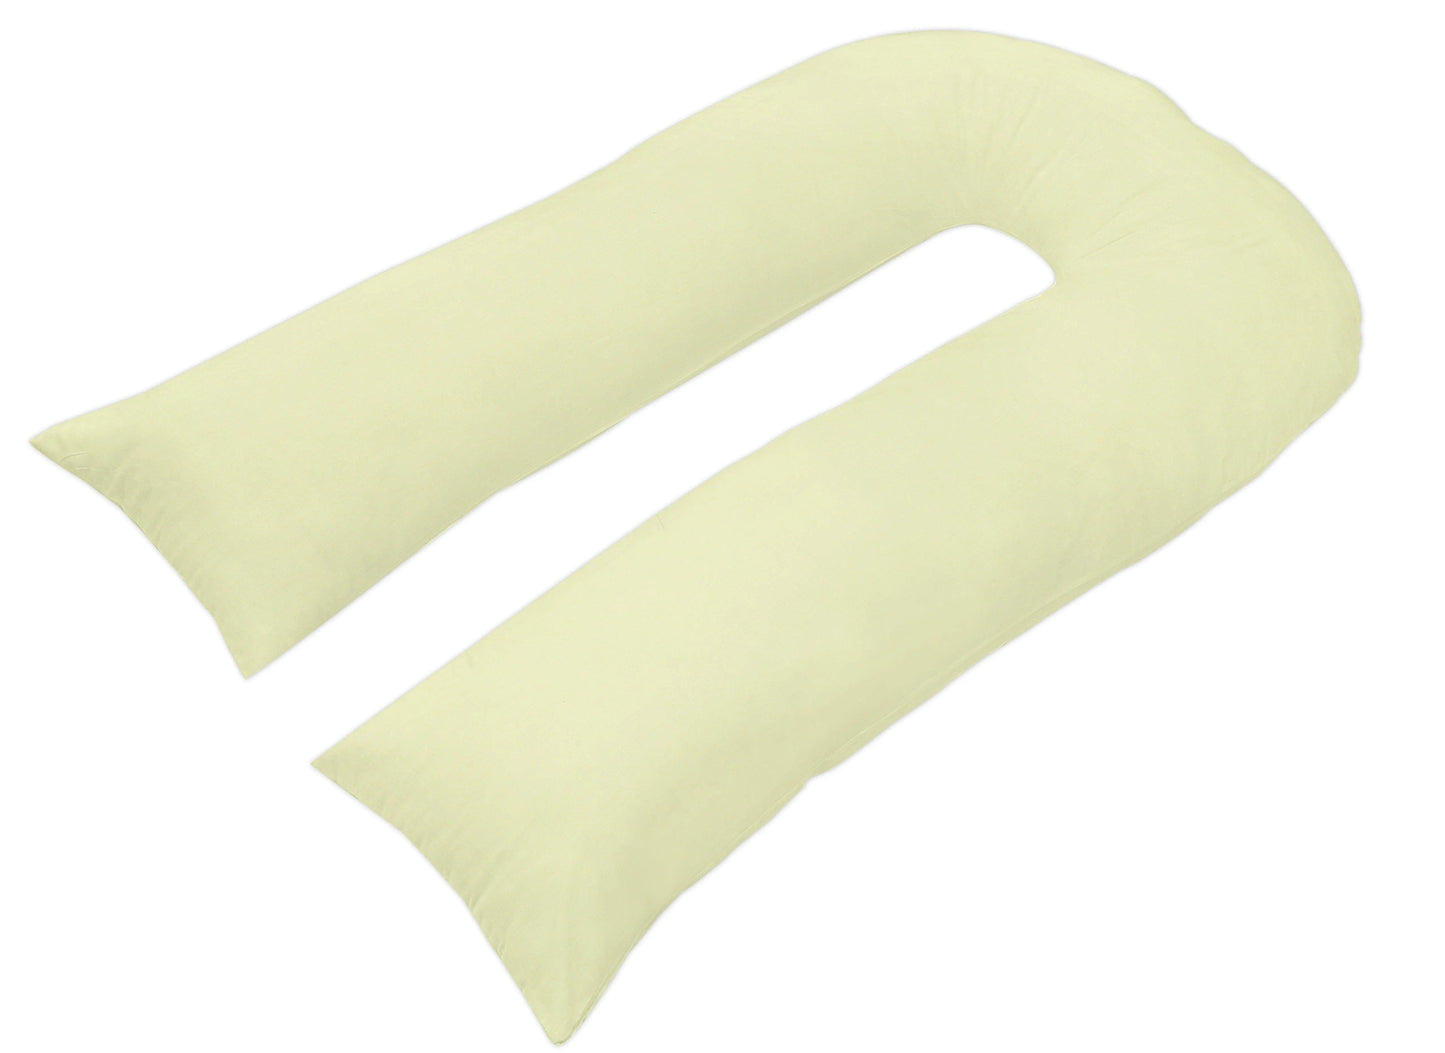 9Ft/12Ft U Pillowcase Full Body Support Maternity Pregnancy Support Pillowcase - Arlinens